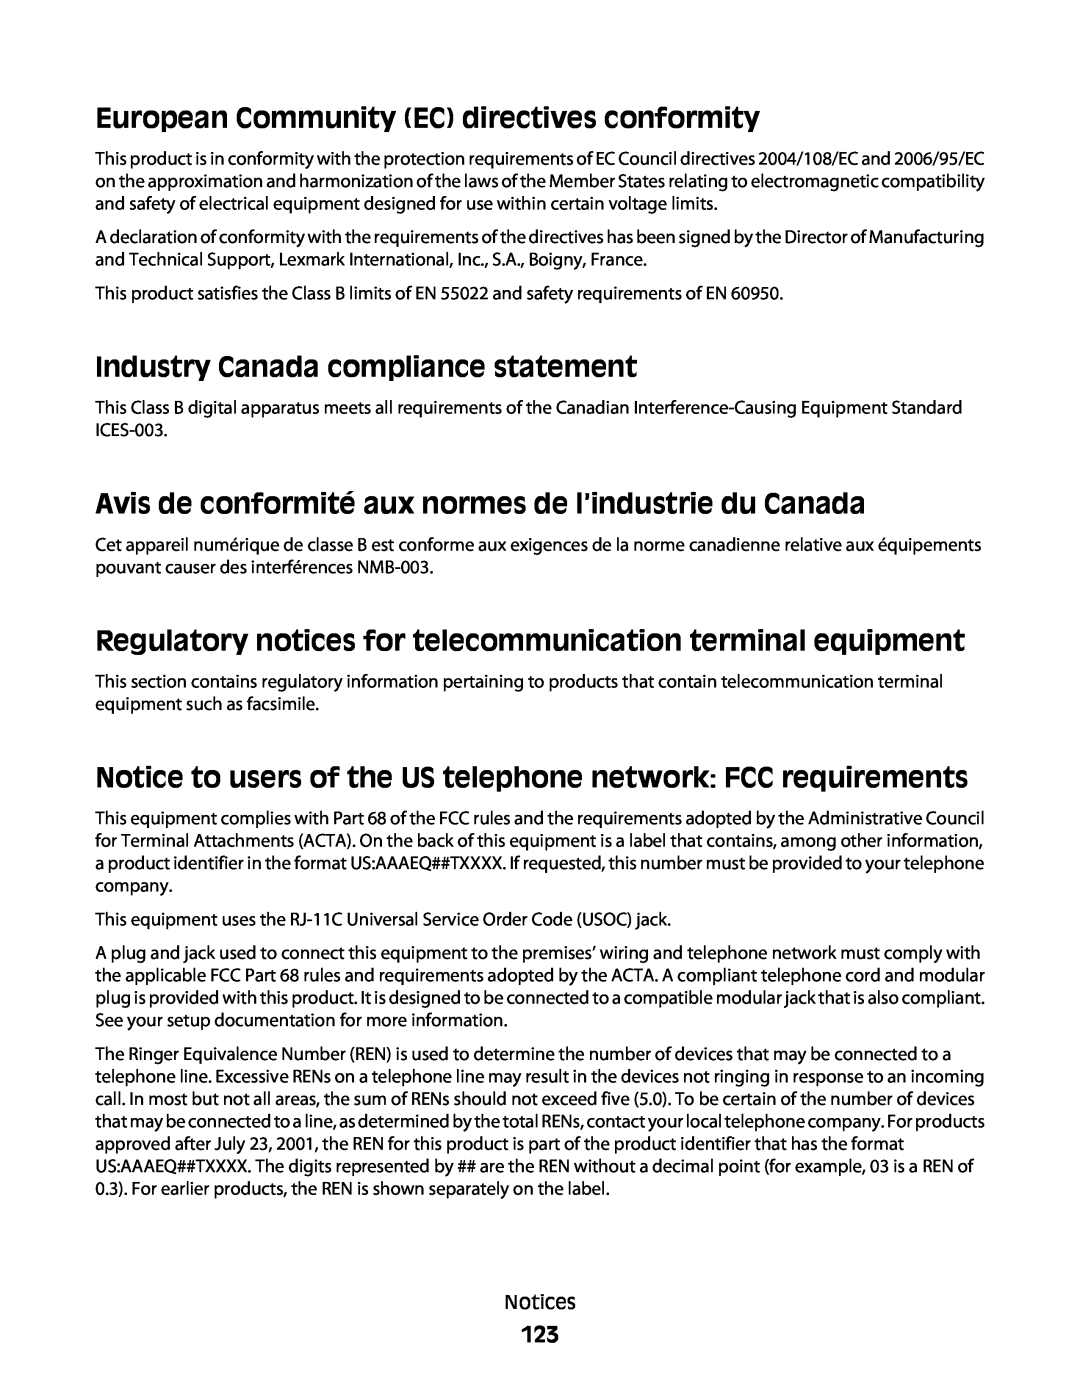 Lexmark 10E, 101 manual European Community EC directives conformity, Industry Canada compliance statement 